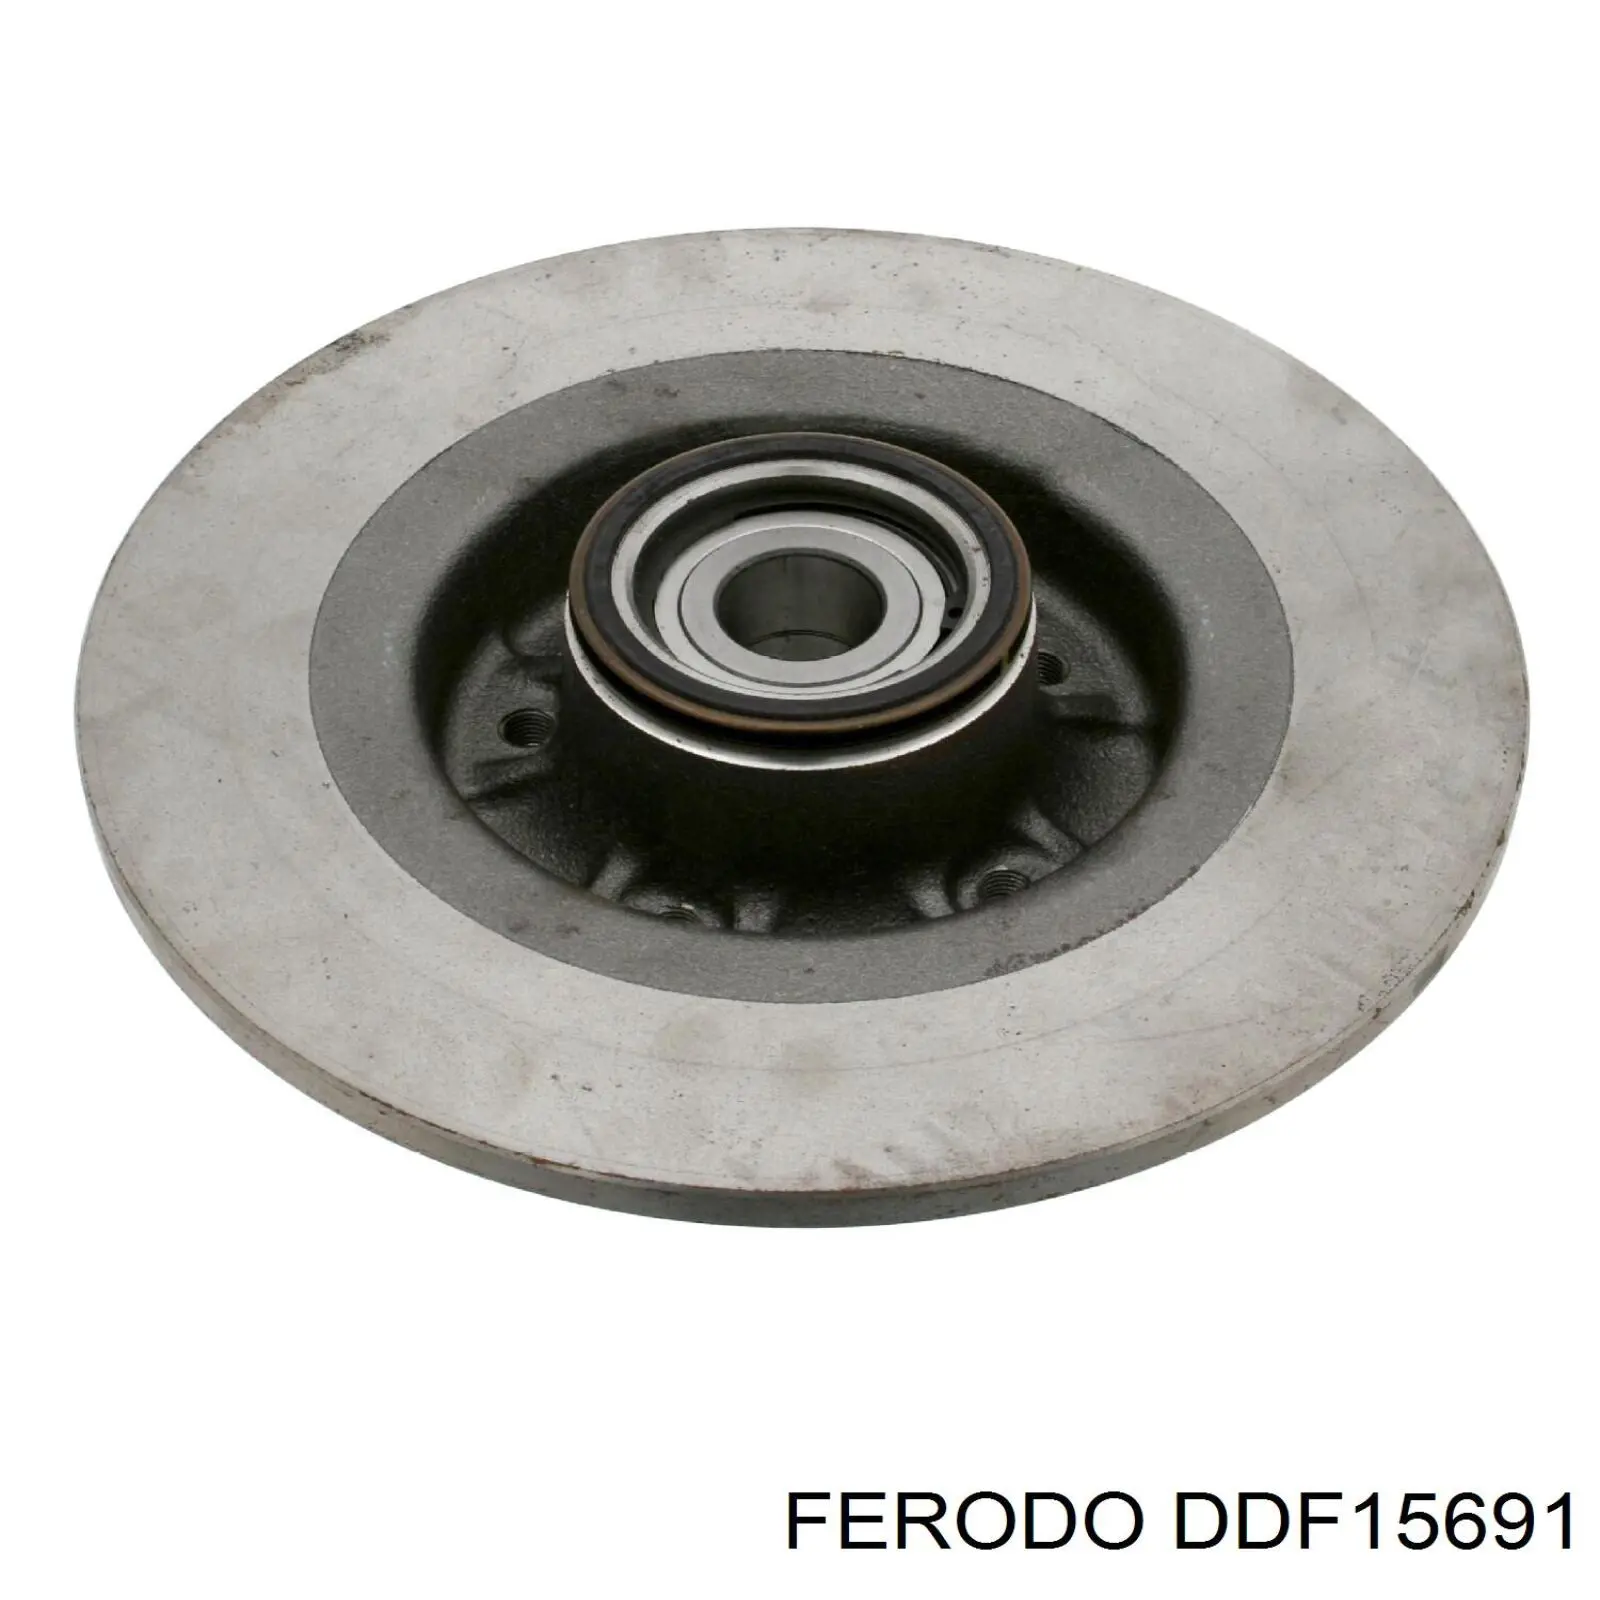 DDF15691 Ferodo disco de freno trasero